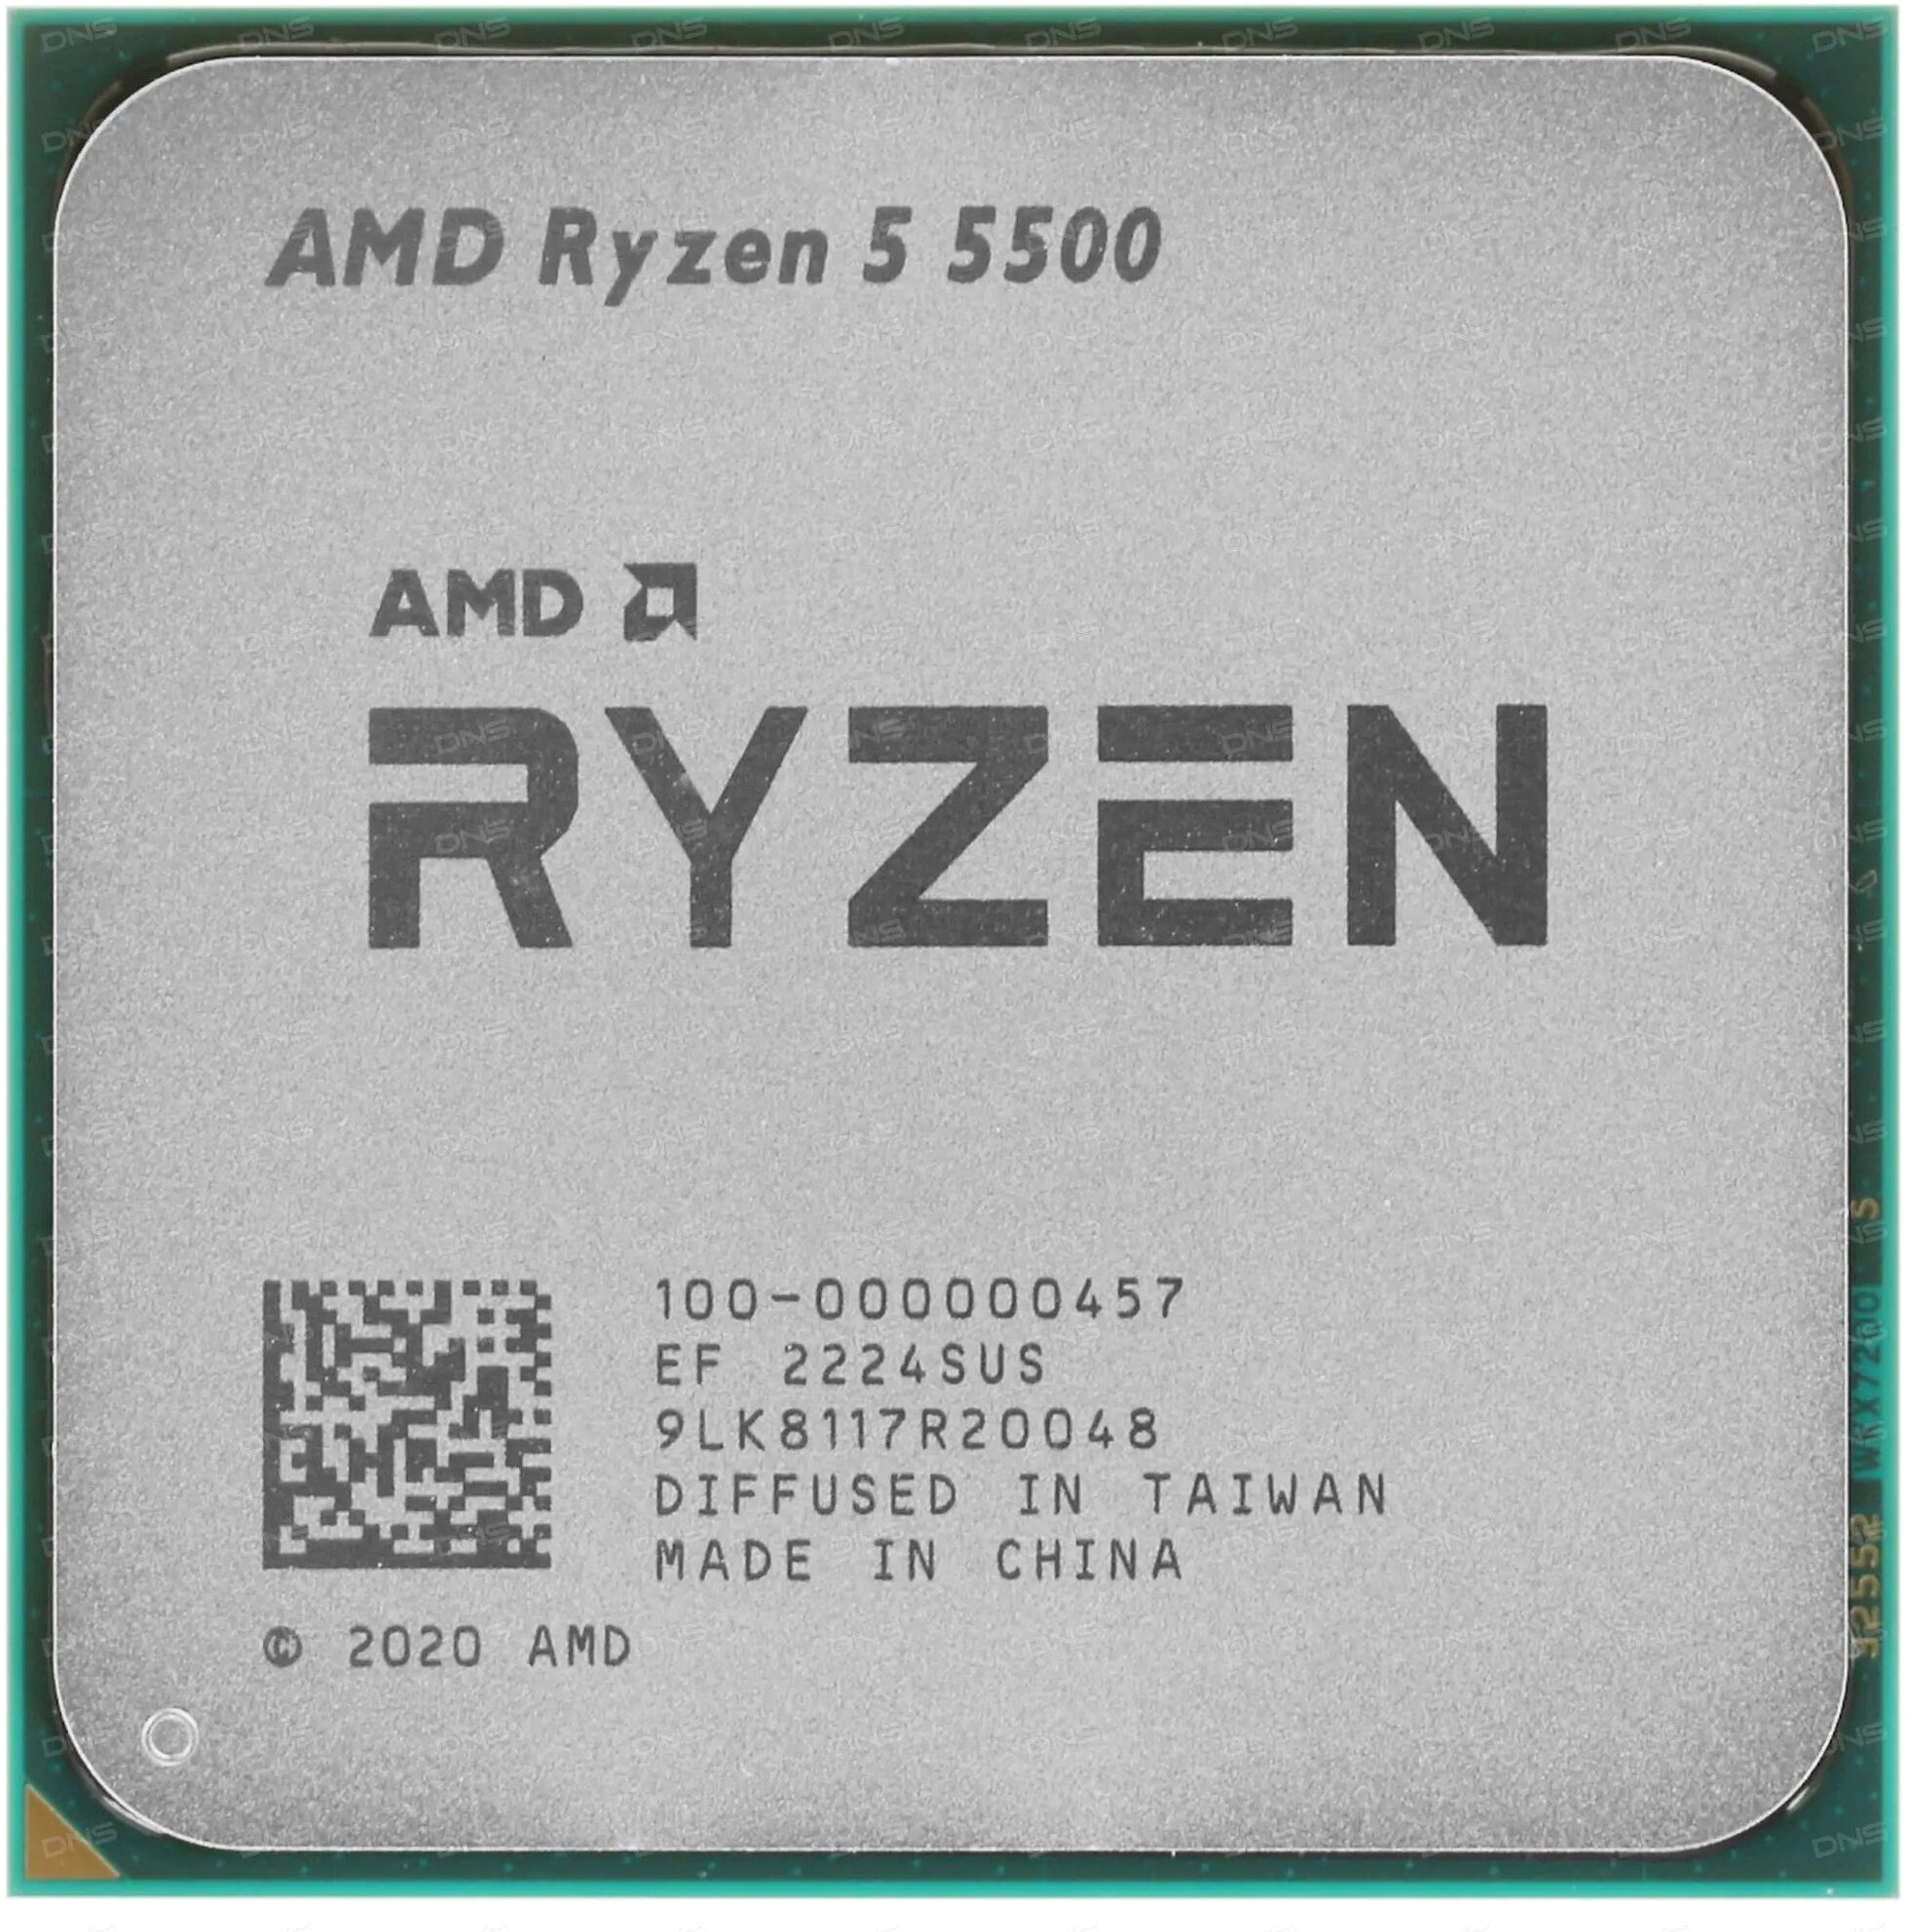  AMD Ryzen 5 5500 X6 SAM4 65W 3600 (100-000000457) (EAC)